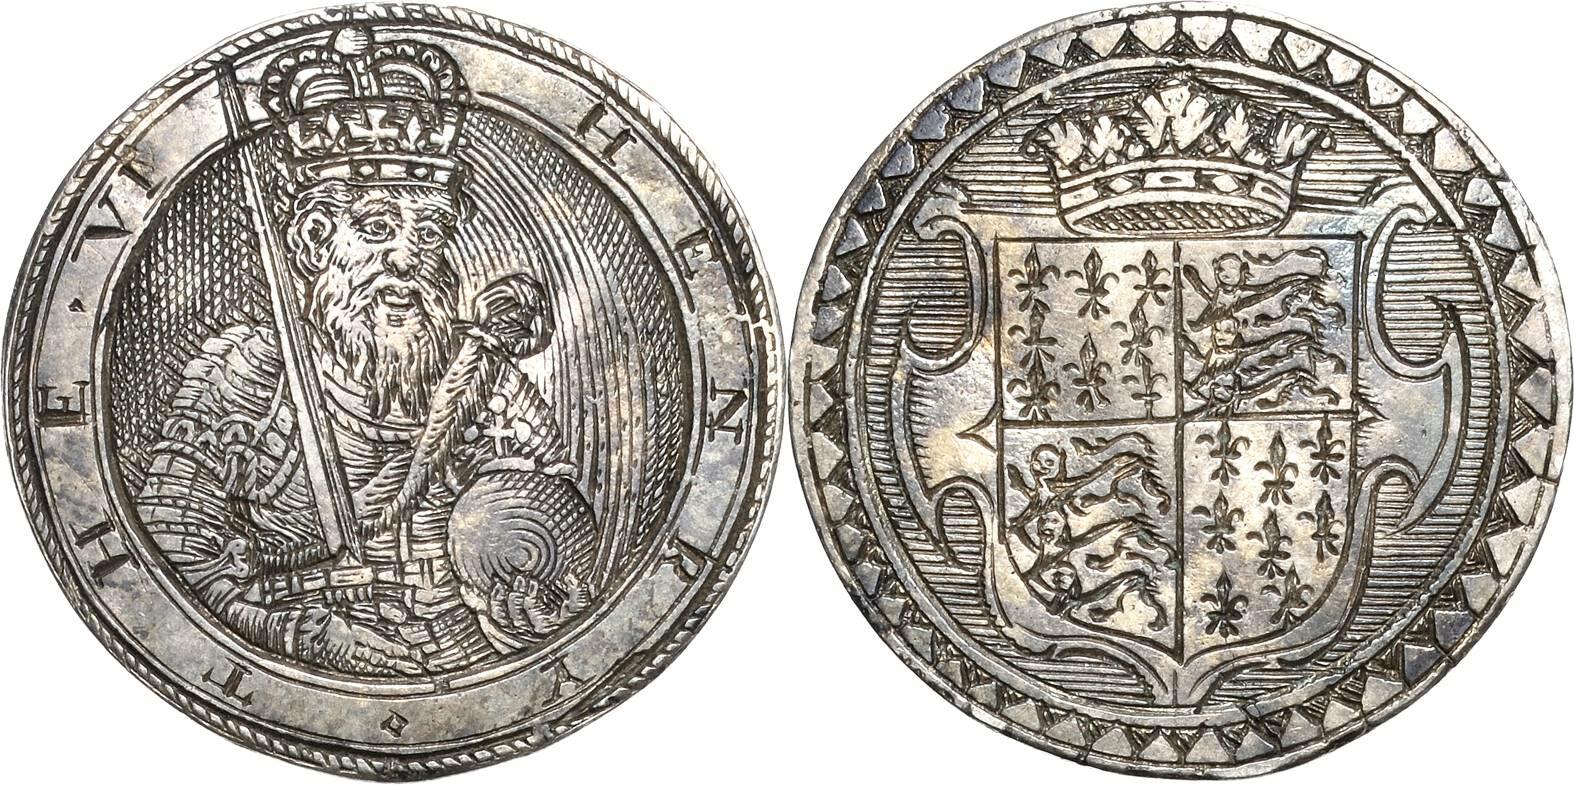 40.150.190: Europe - Great Britain - Henry VI, 1470-1471